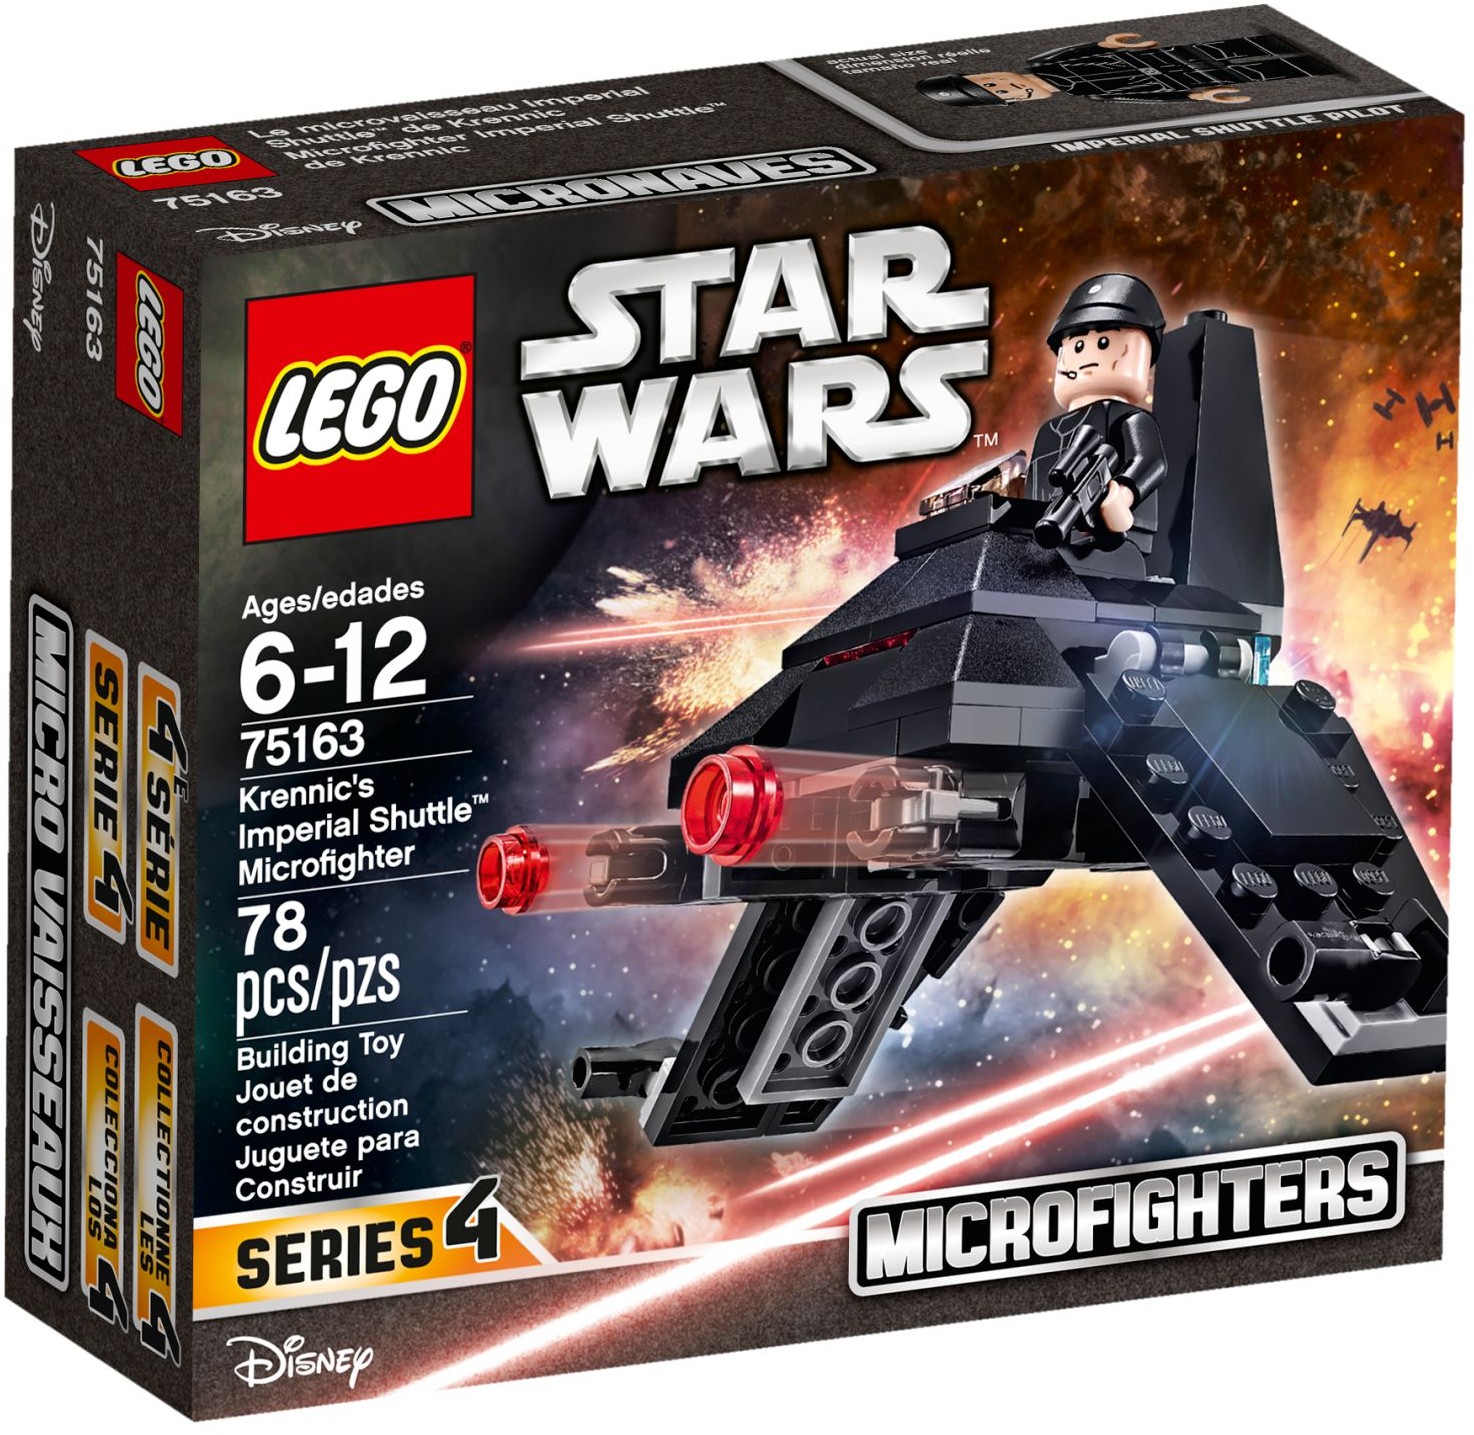 Vaisseau spatial miniature Lego star wars modele imperial star destroyer